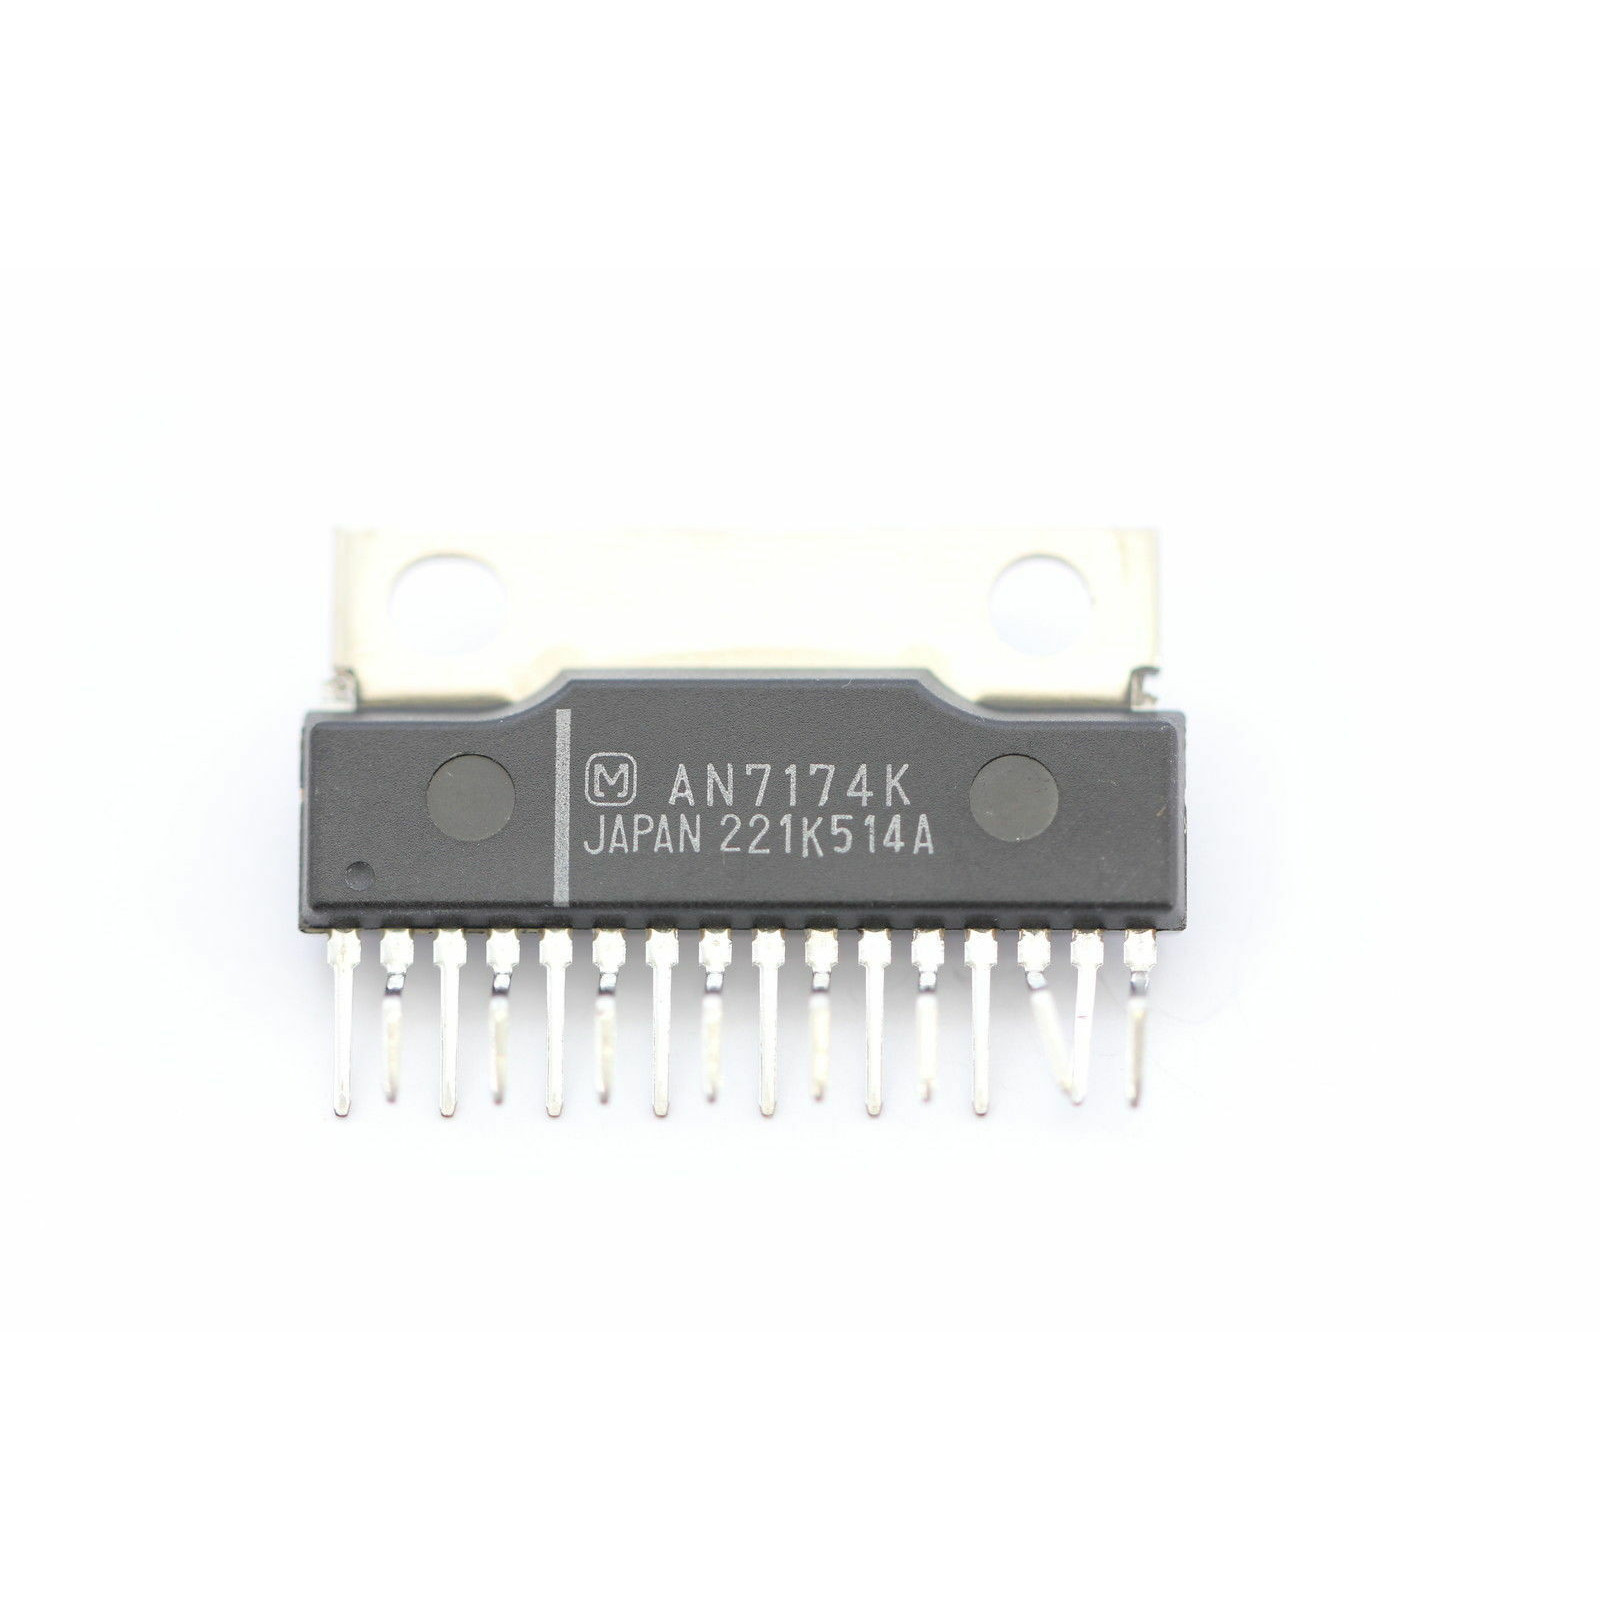 AN7174K Original New Matsushita Integrated Circuit